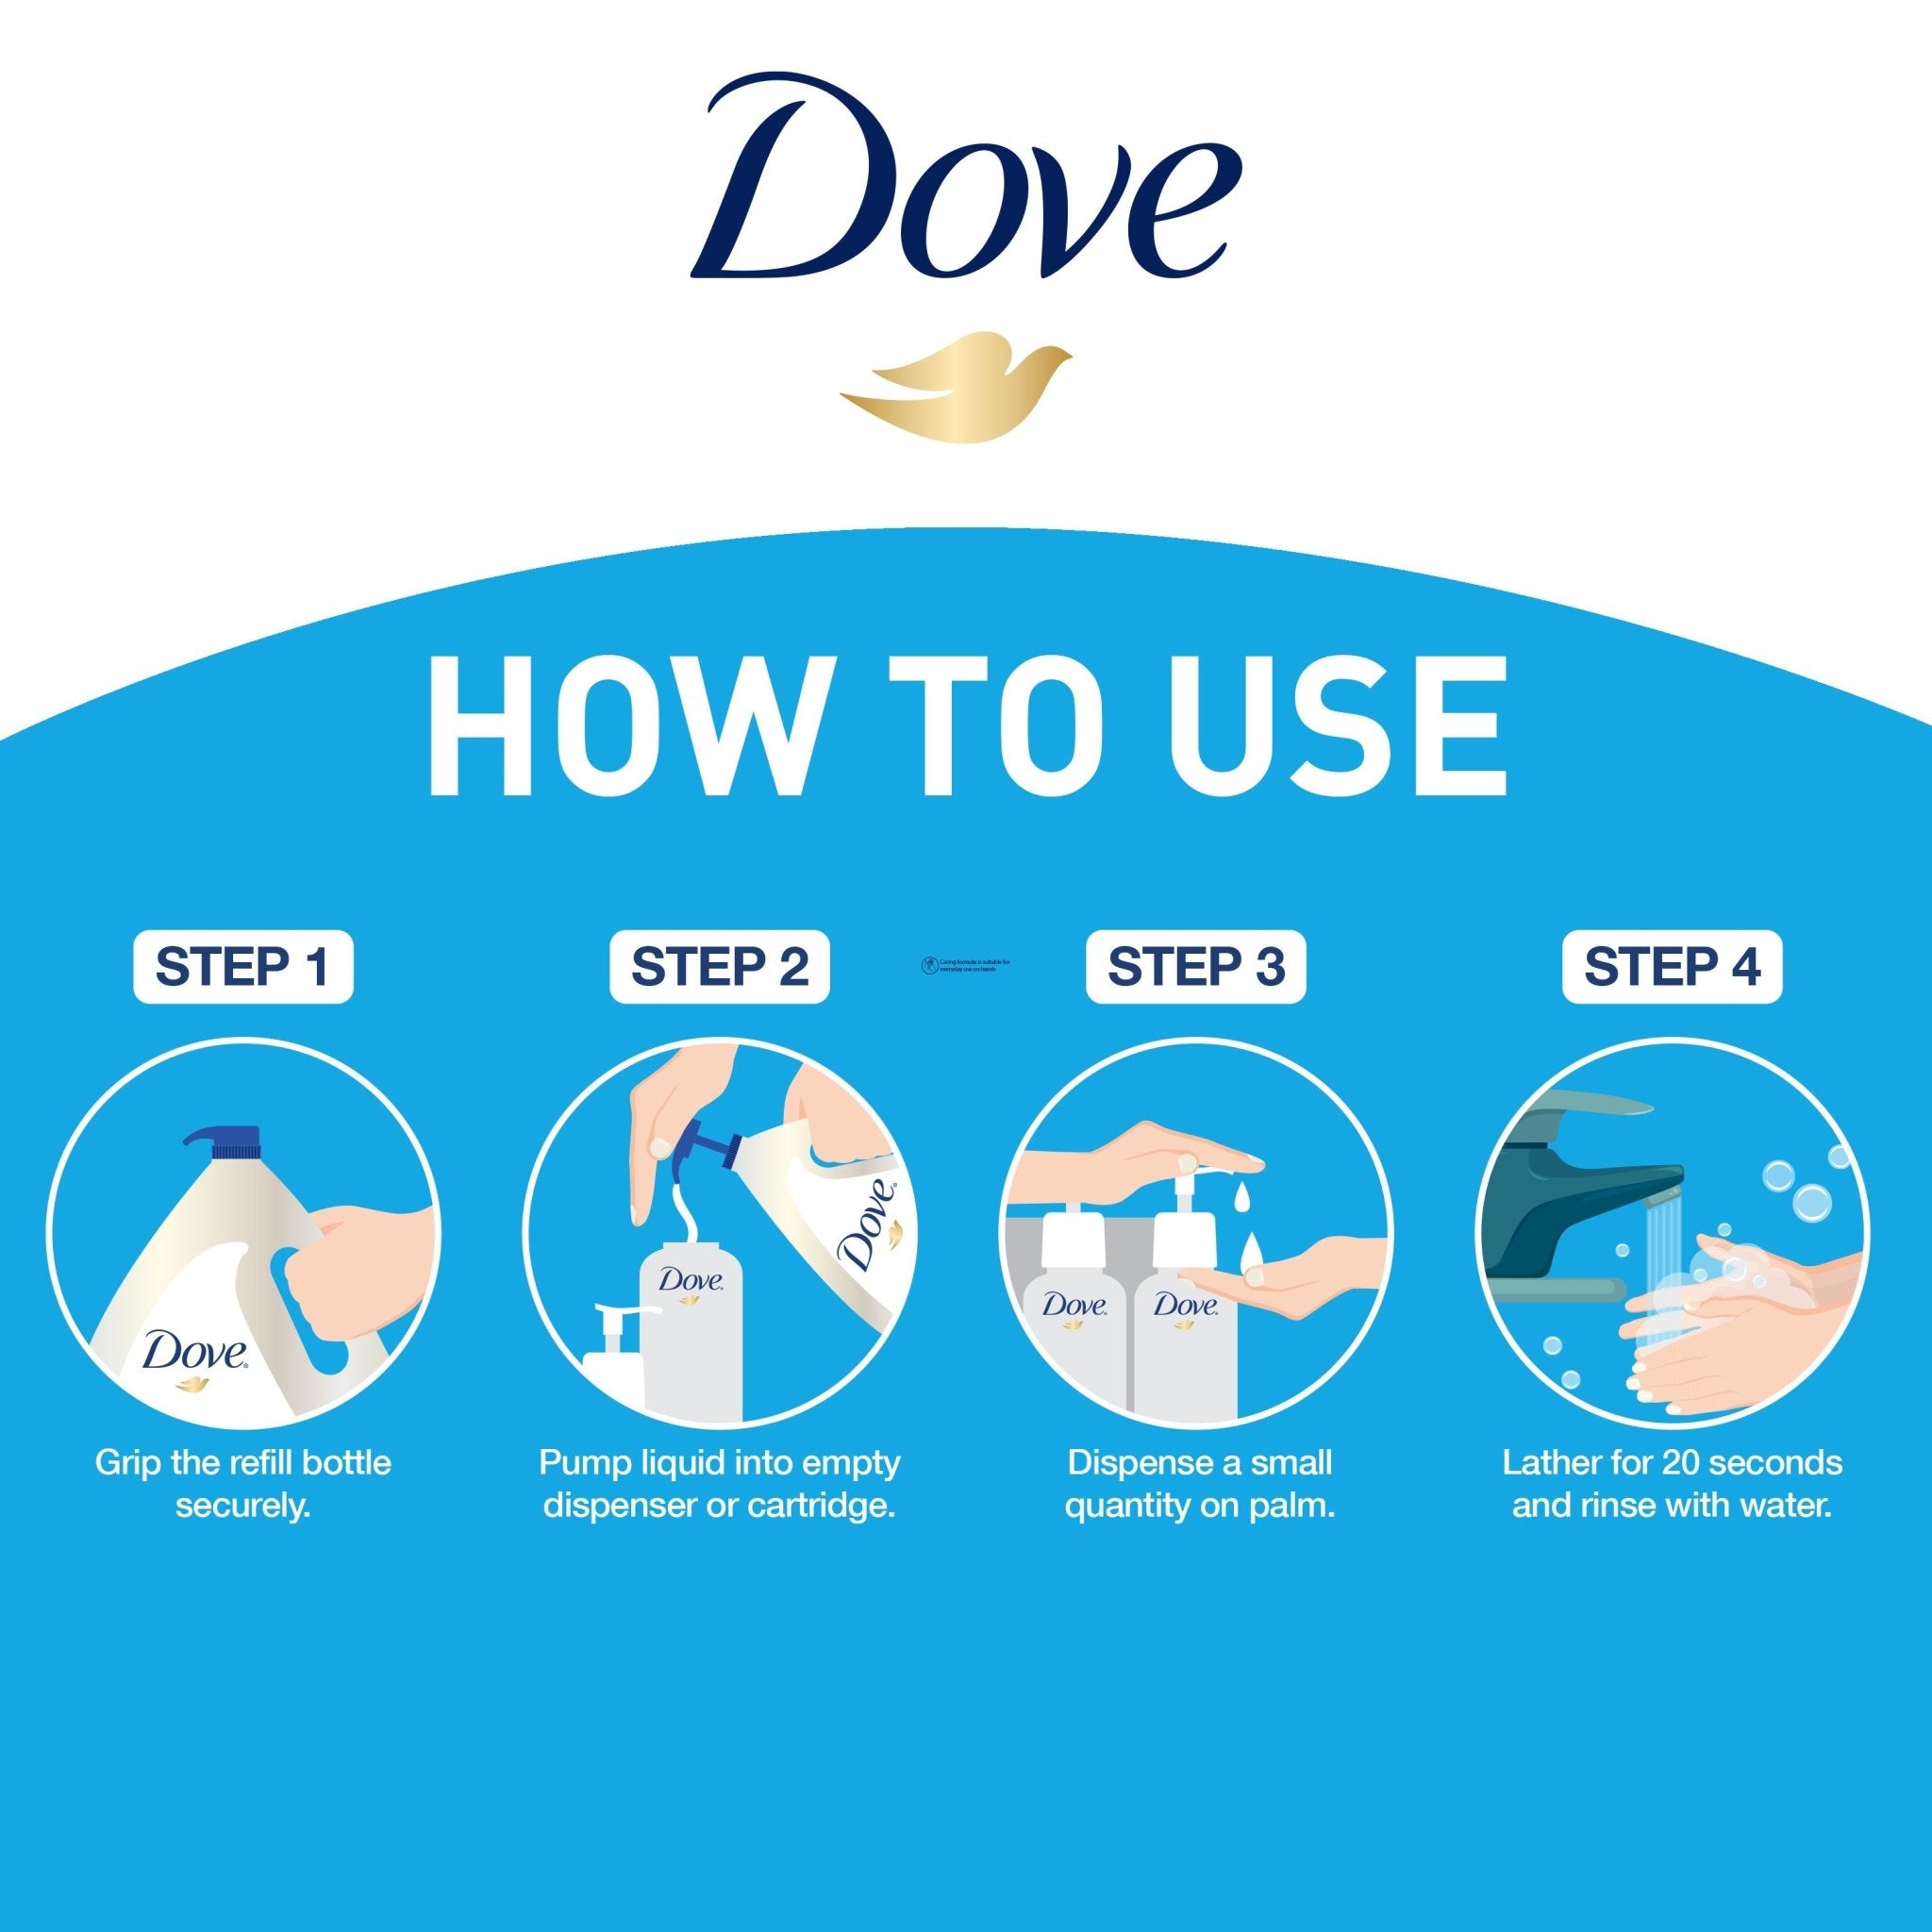 Dove Pro Deeply Nourishing Hand Wash 2L - Unilever Professional Philippines